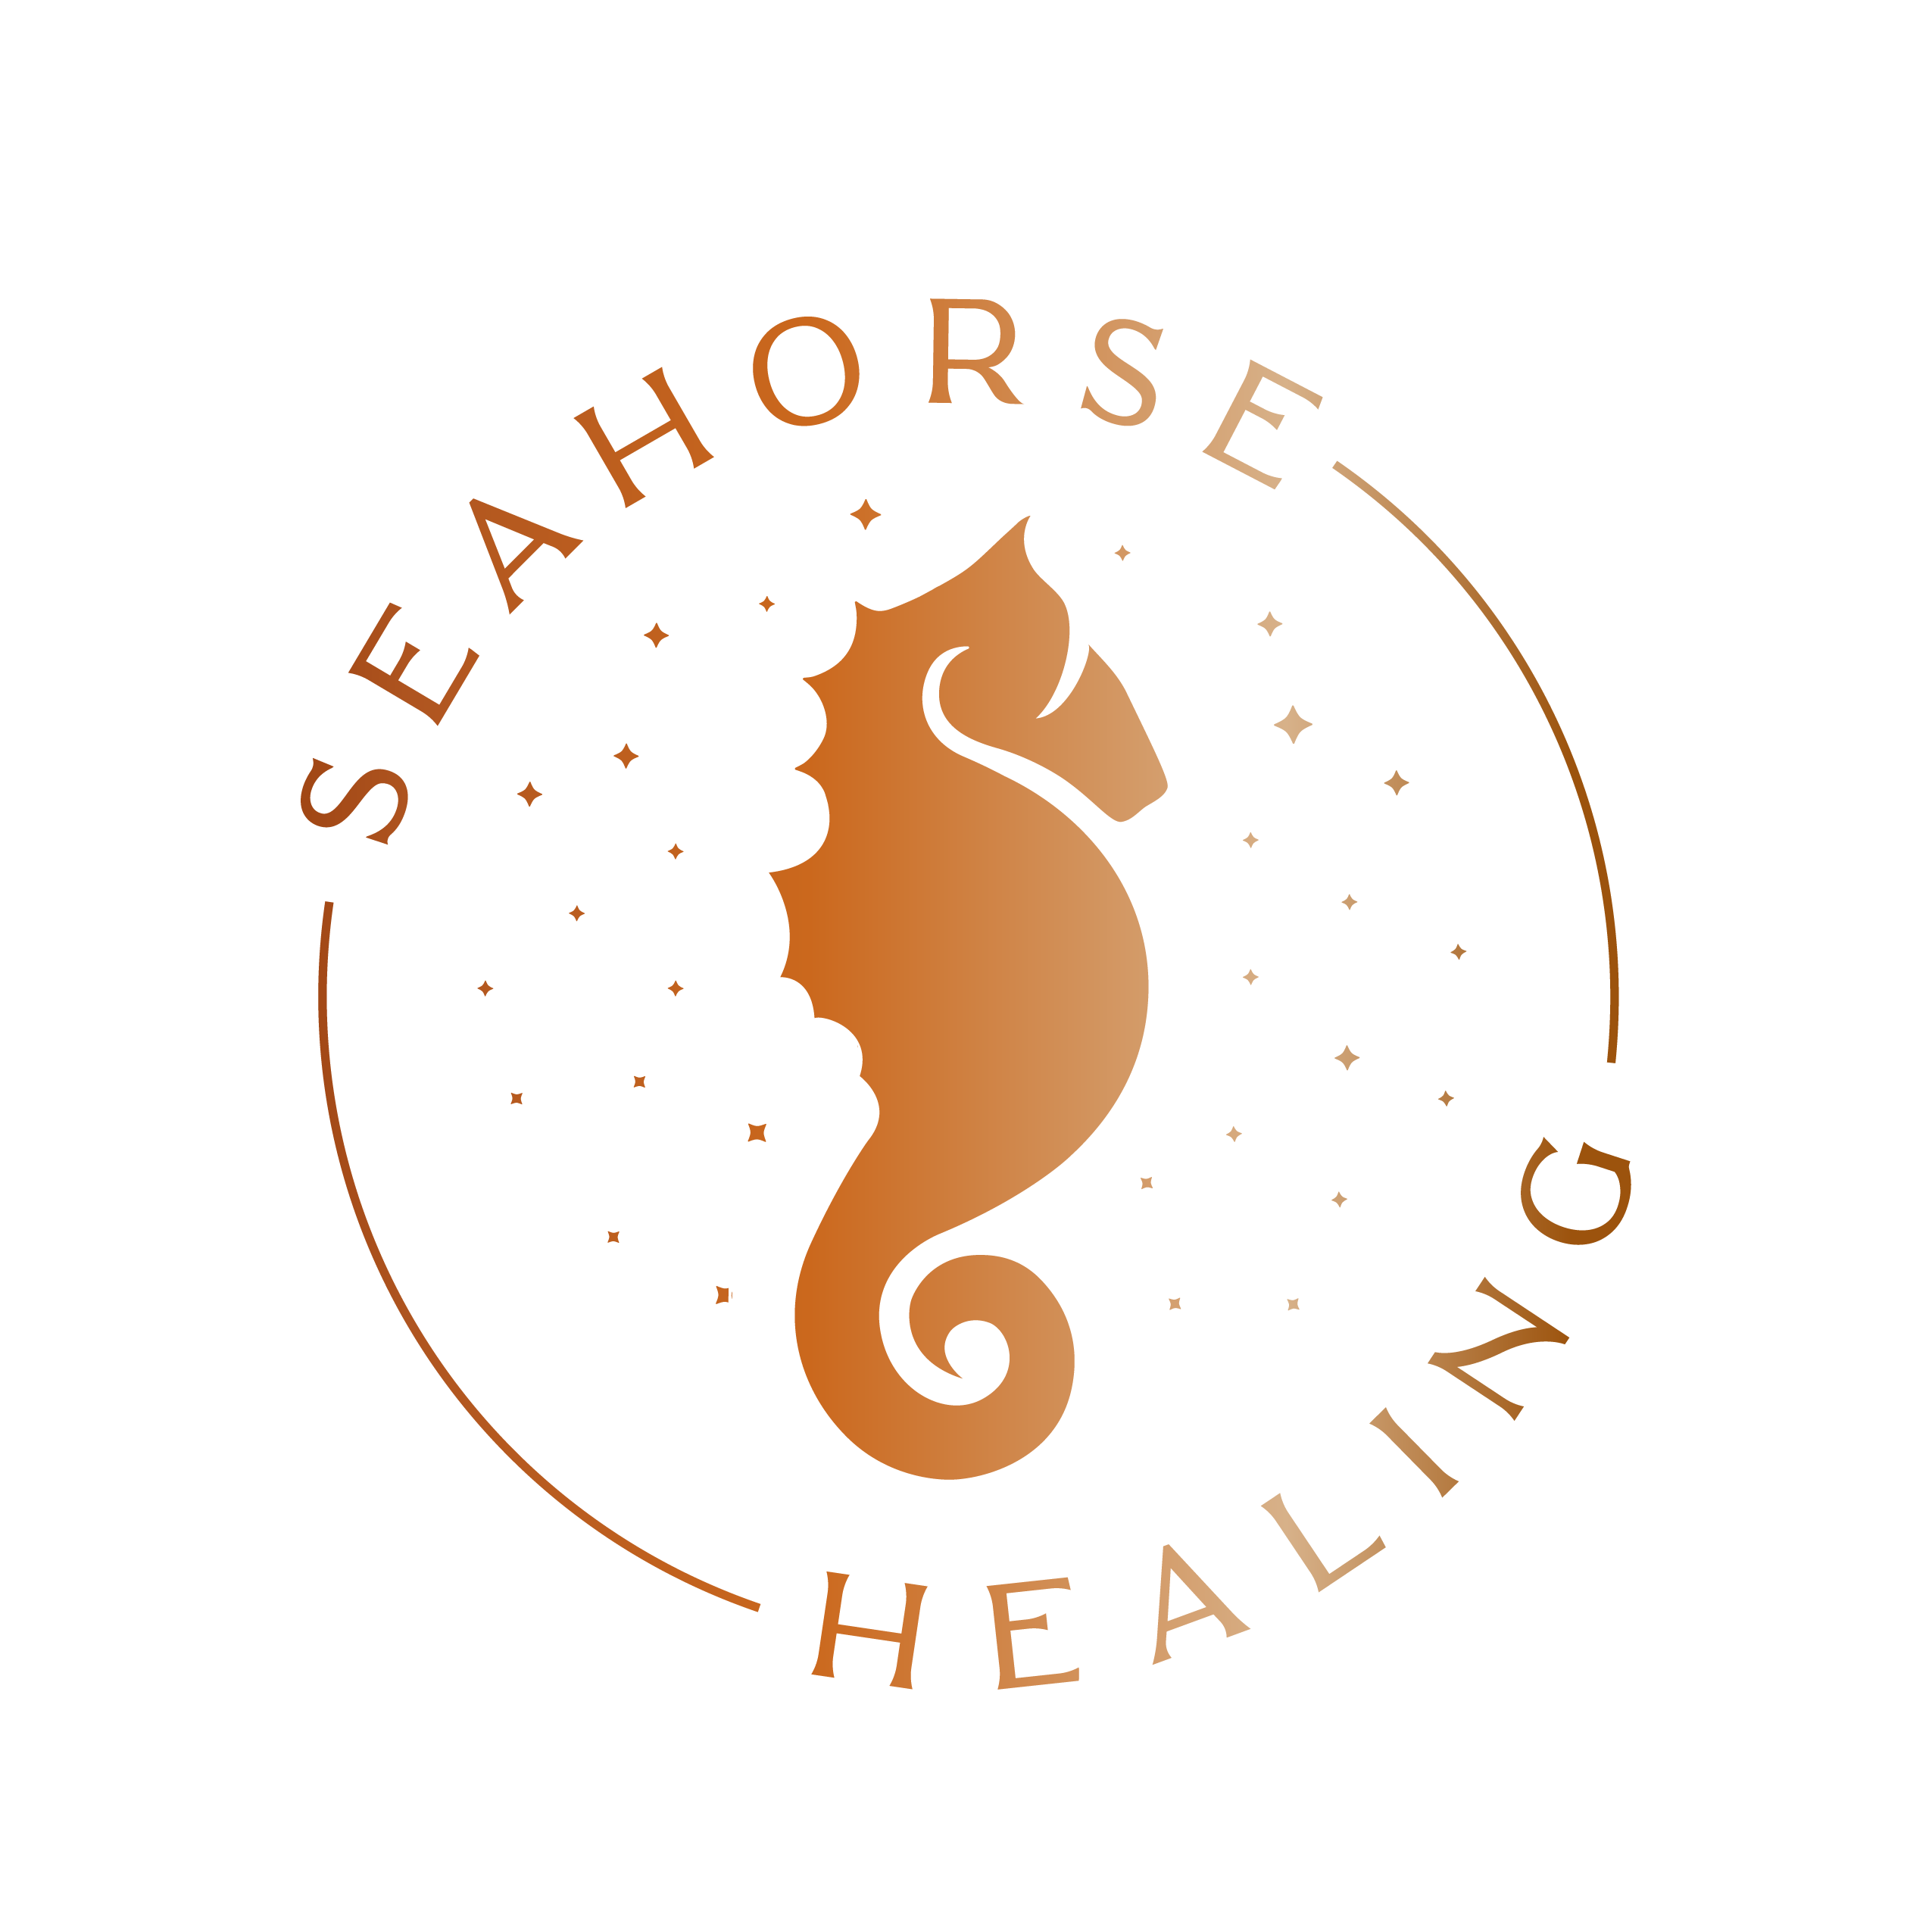 Seahorse Healing